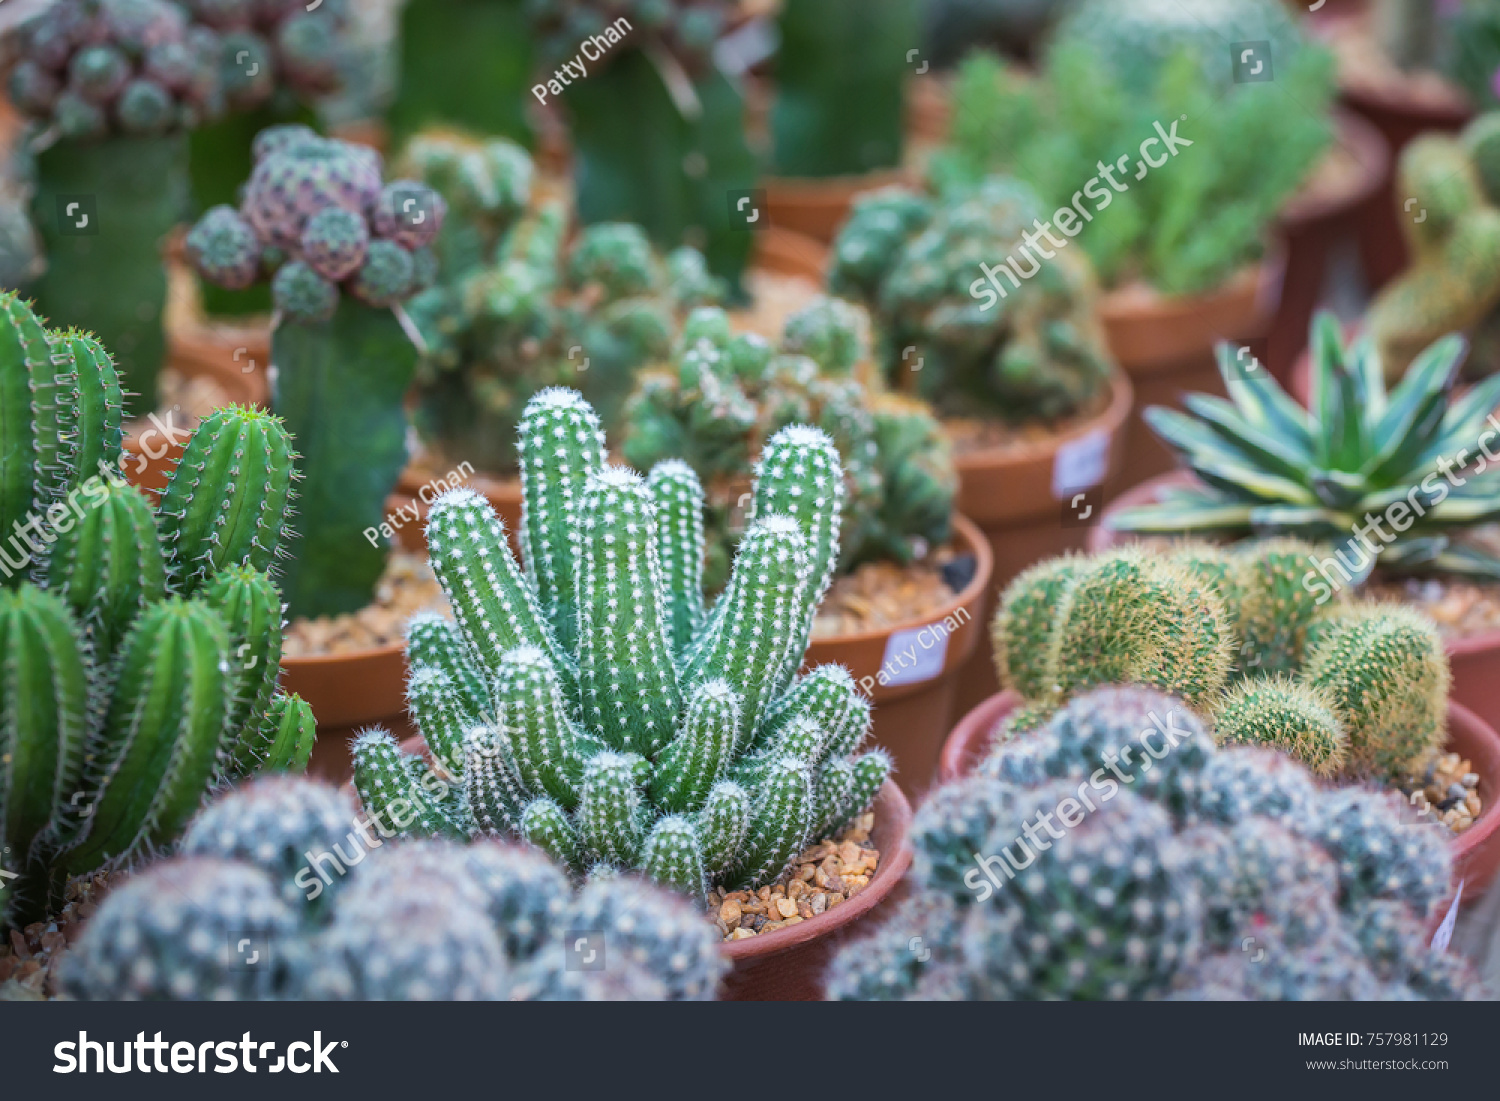 Zire gulculuk Kaktus